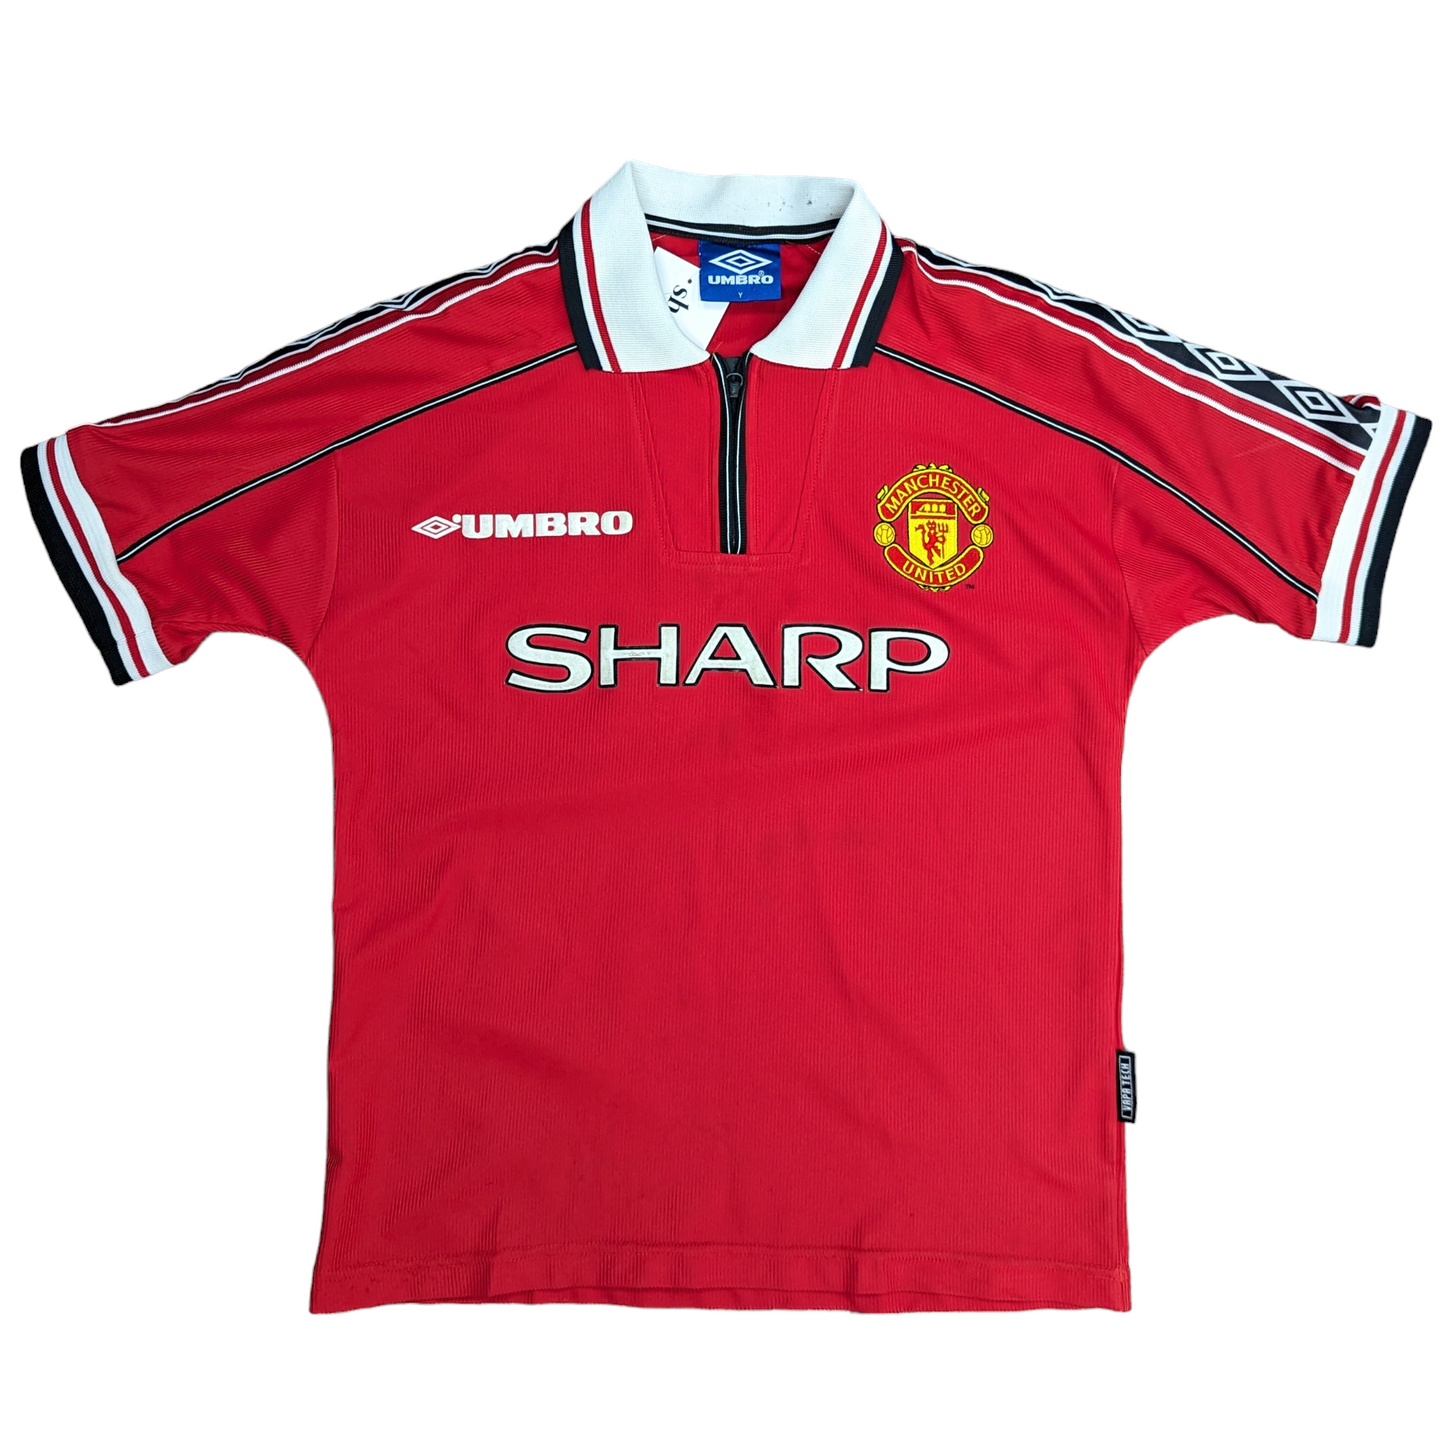 1998-00 Manchester United Shirt Size XS (Kids L)